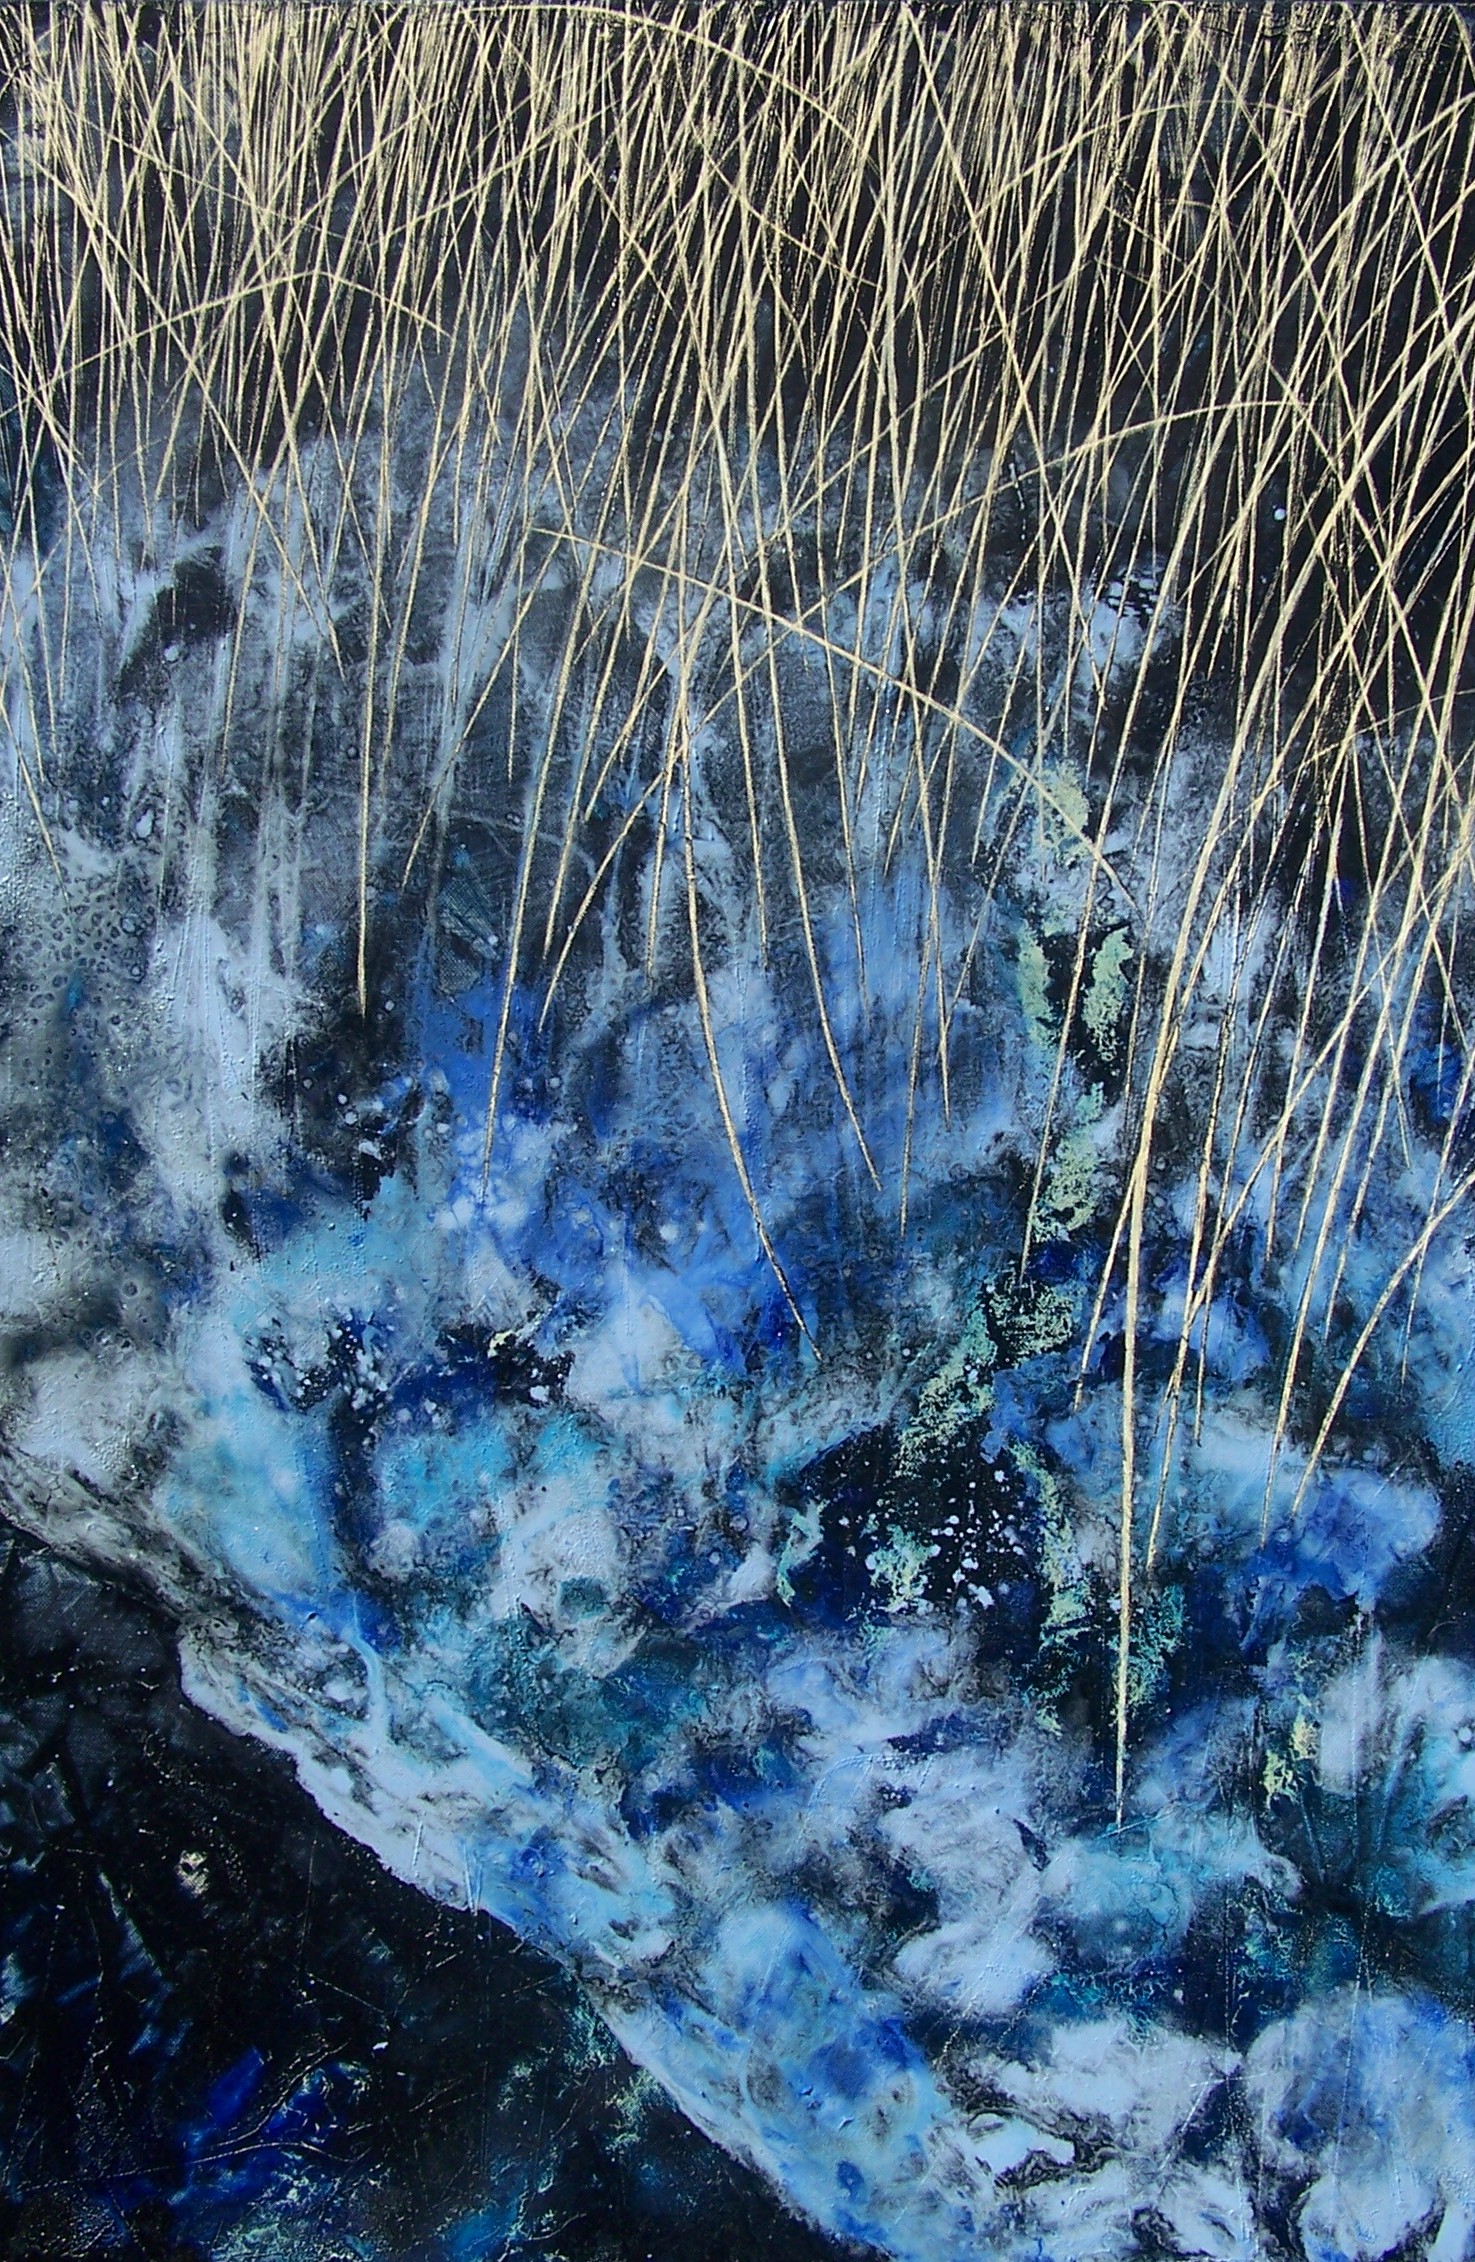 Frozen Line, Winter reeds 2, oil on canvas